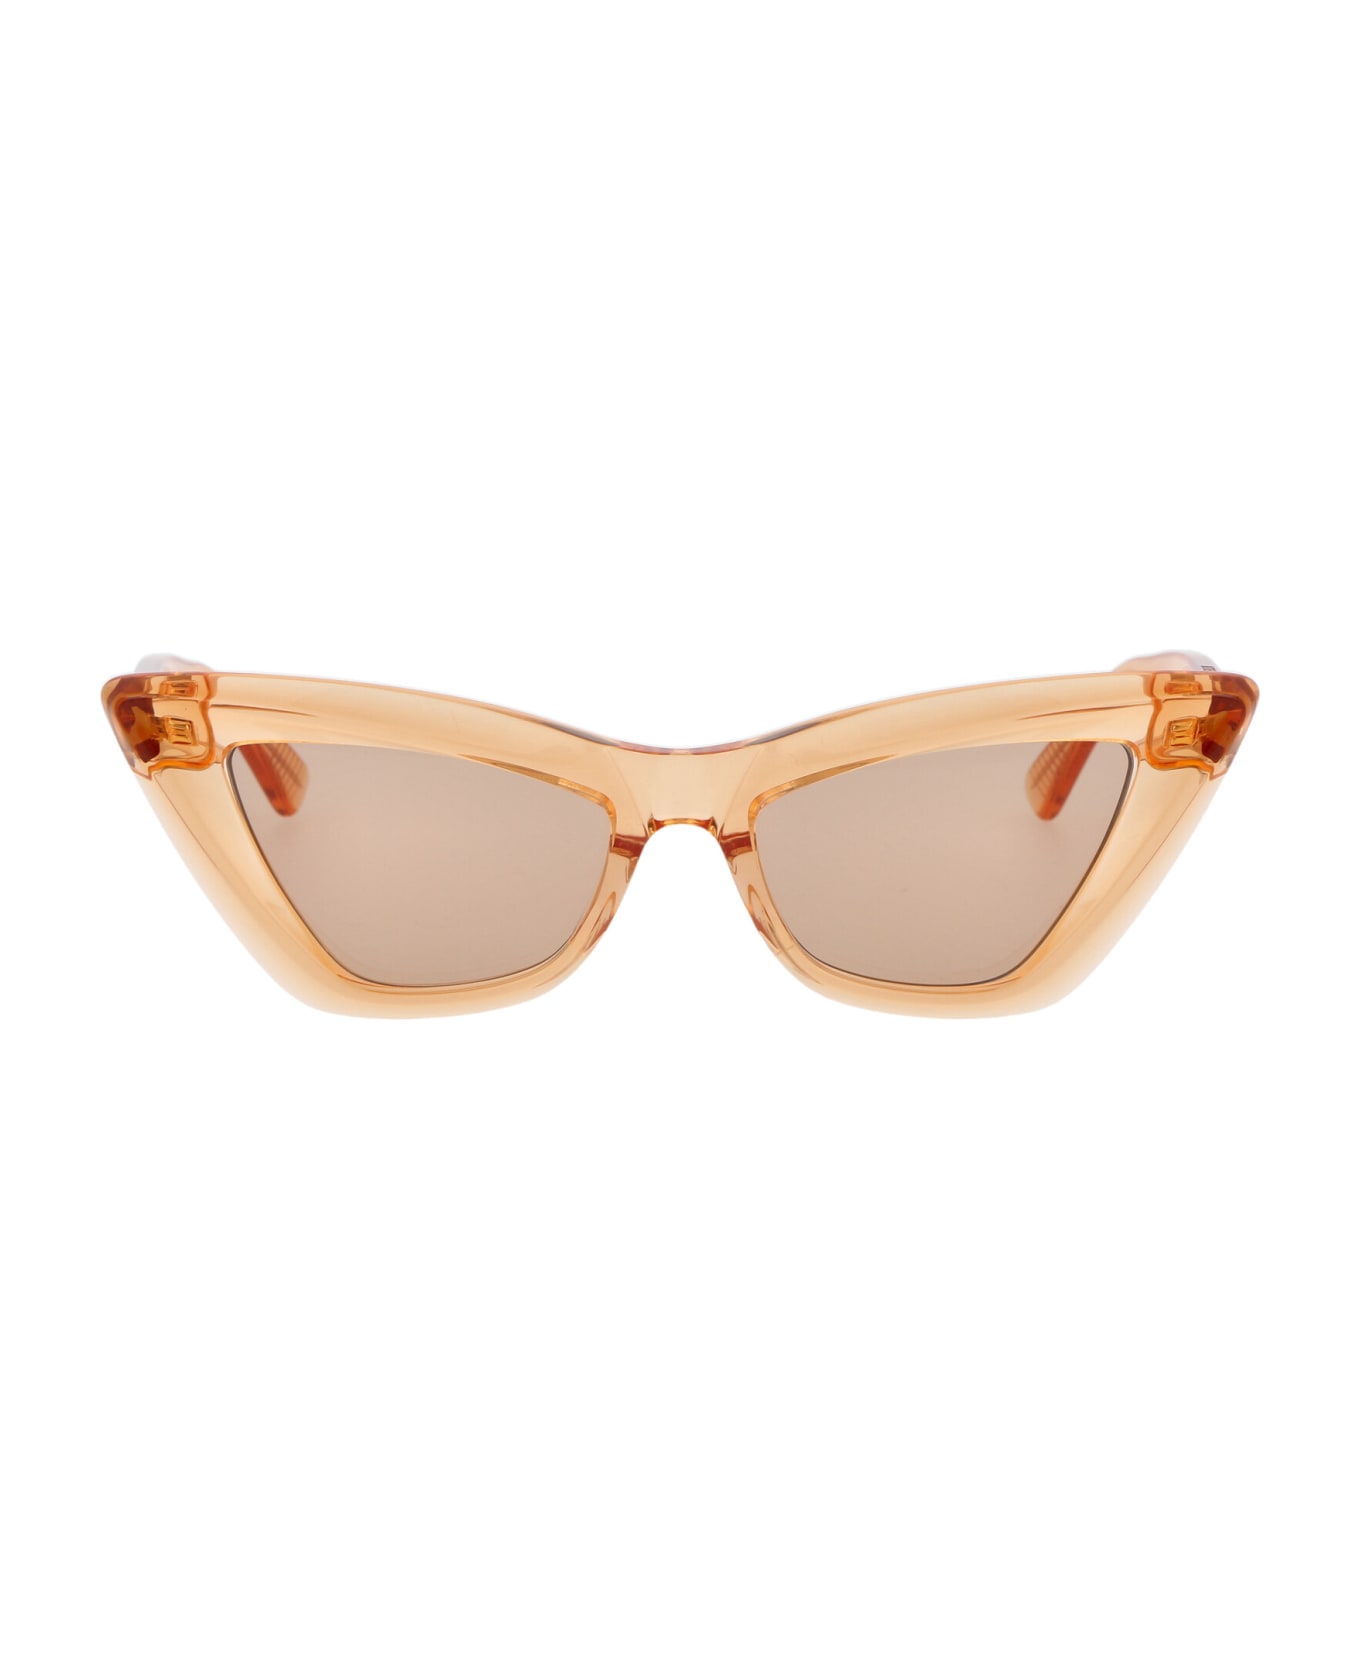 Bottega Veneta Eyewear Bv1101s Sunglasses - 011 ORANGE ORANGE BROWN サングラス